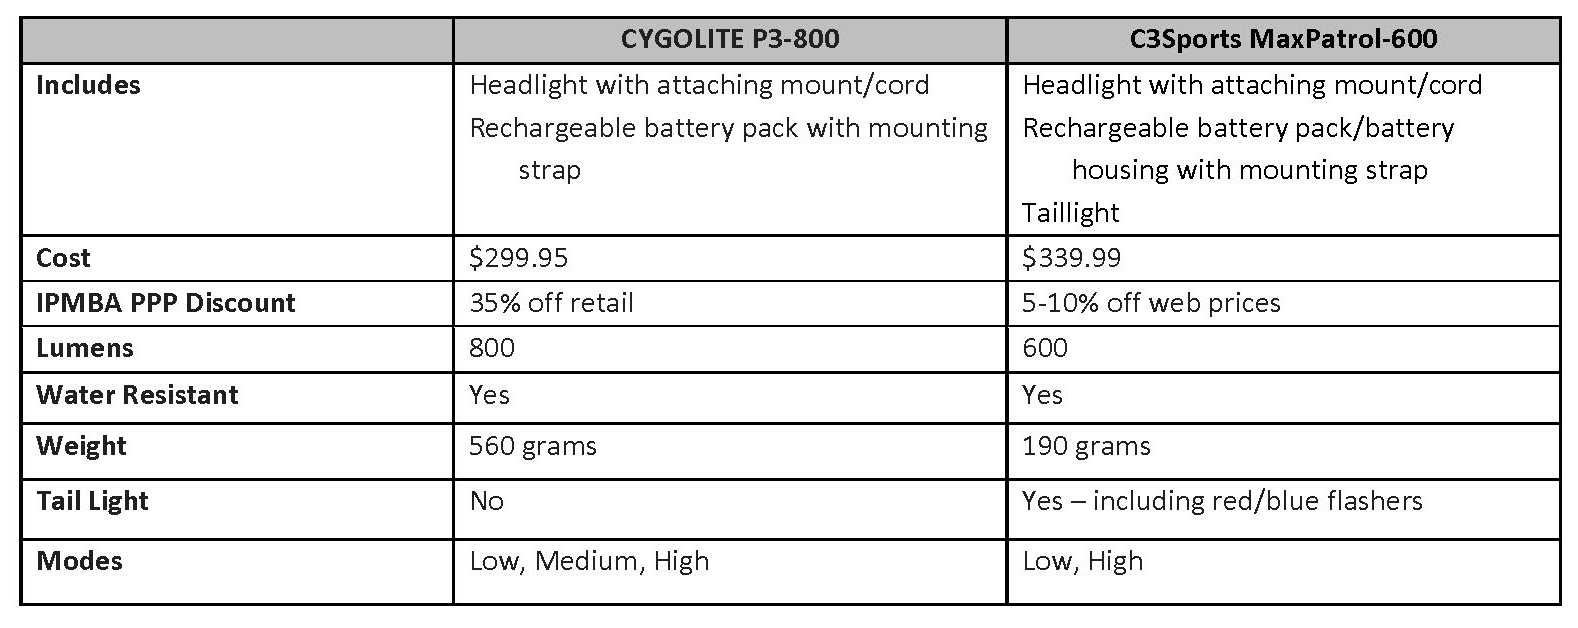 Cygolite P3-800 vs. C3Sports MaxPatrol-600